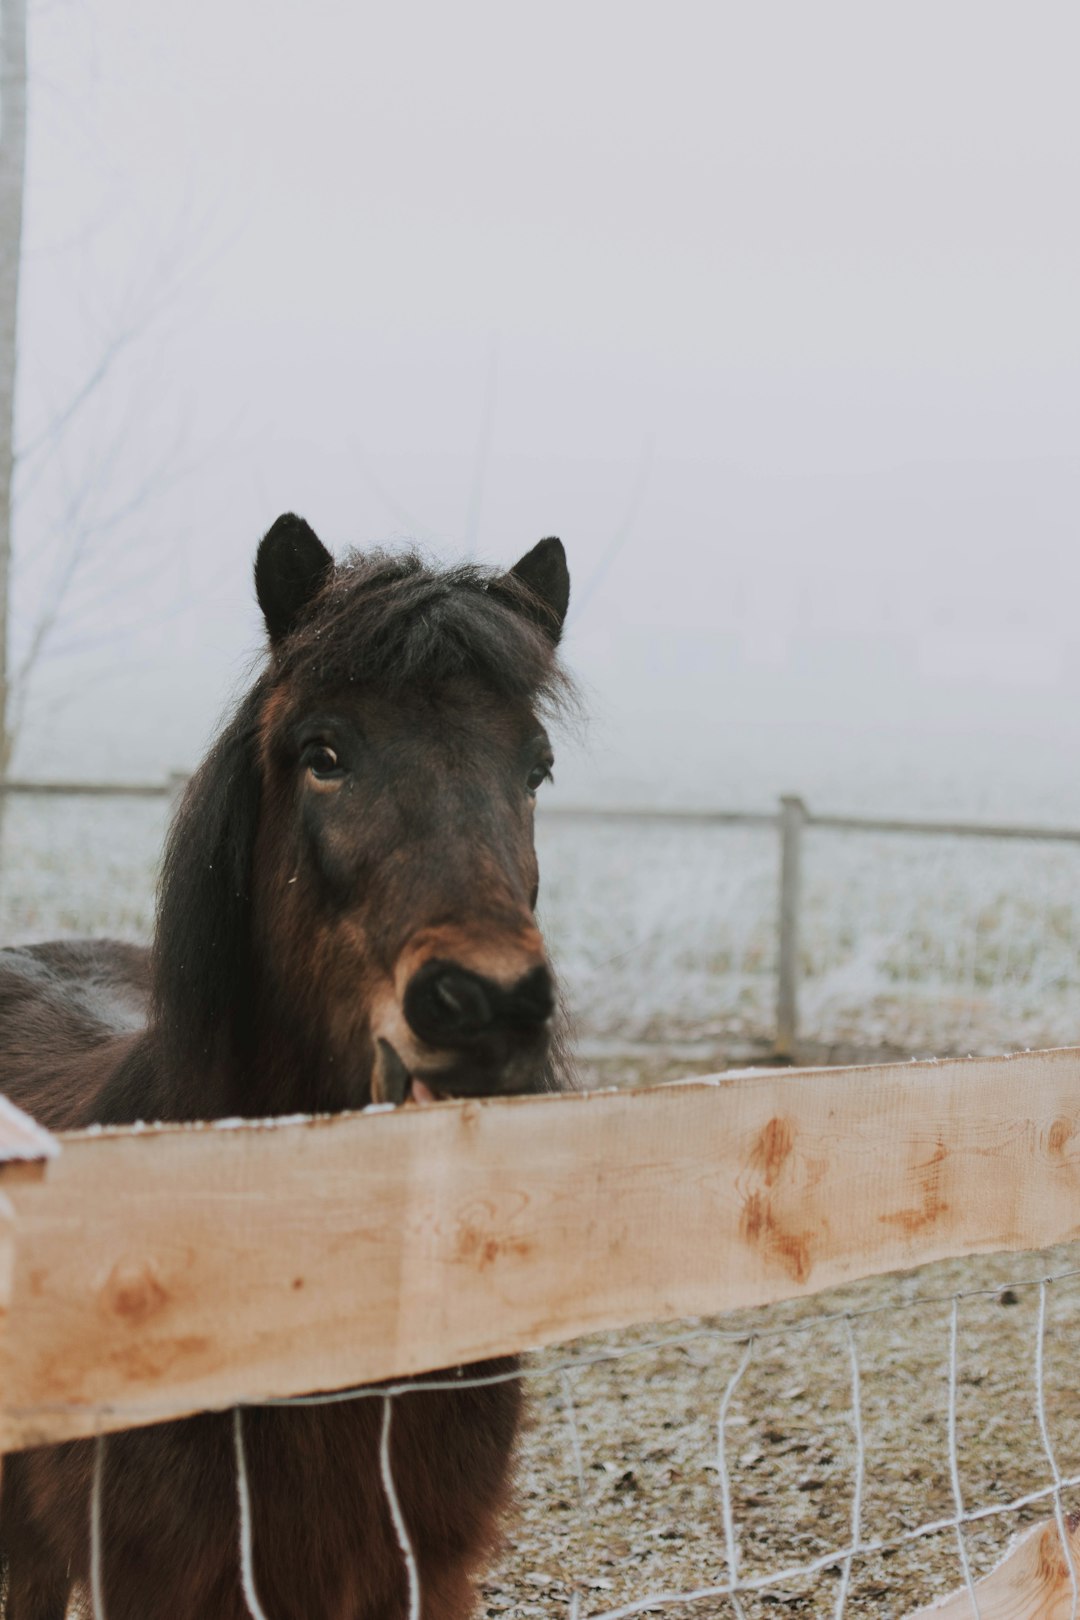 black horse beside fence during daytime